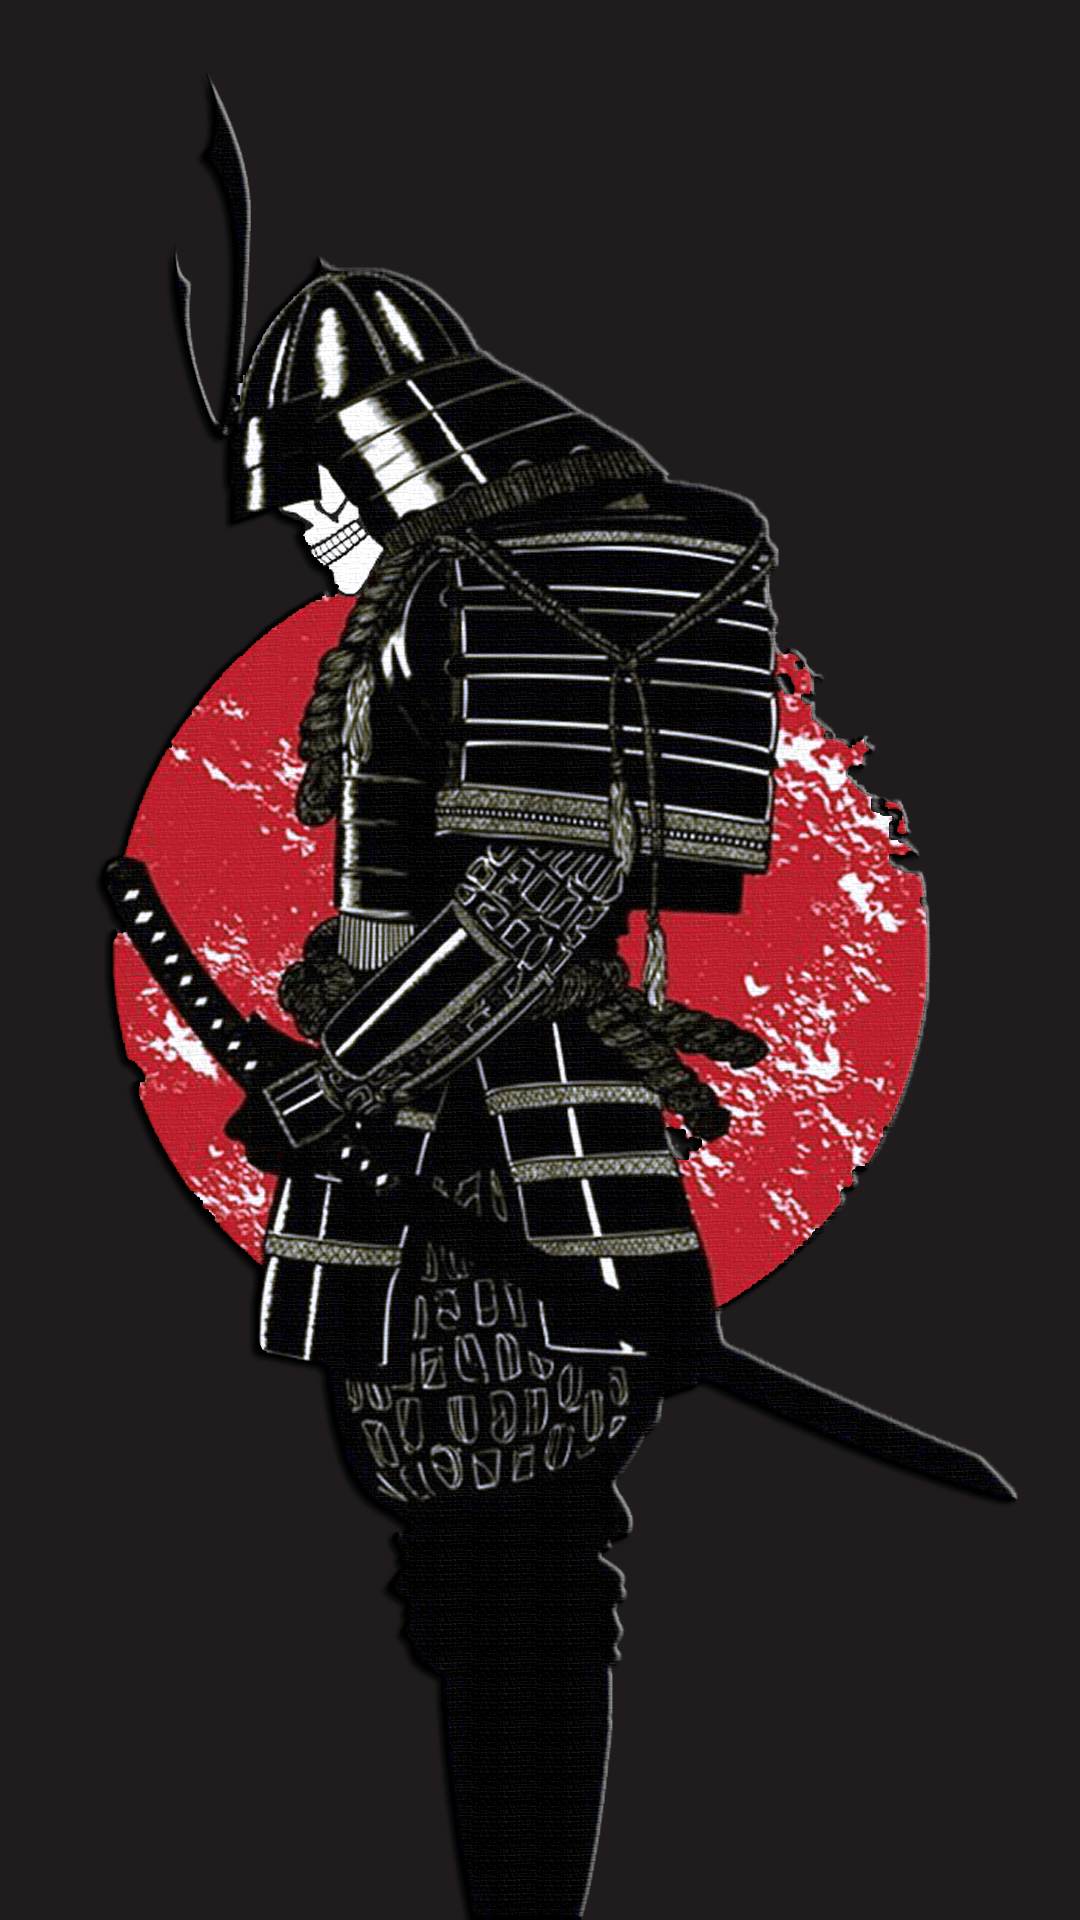 Samurai Abstract iPhone Wallpaper Free Samurai Abstract